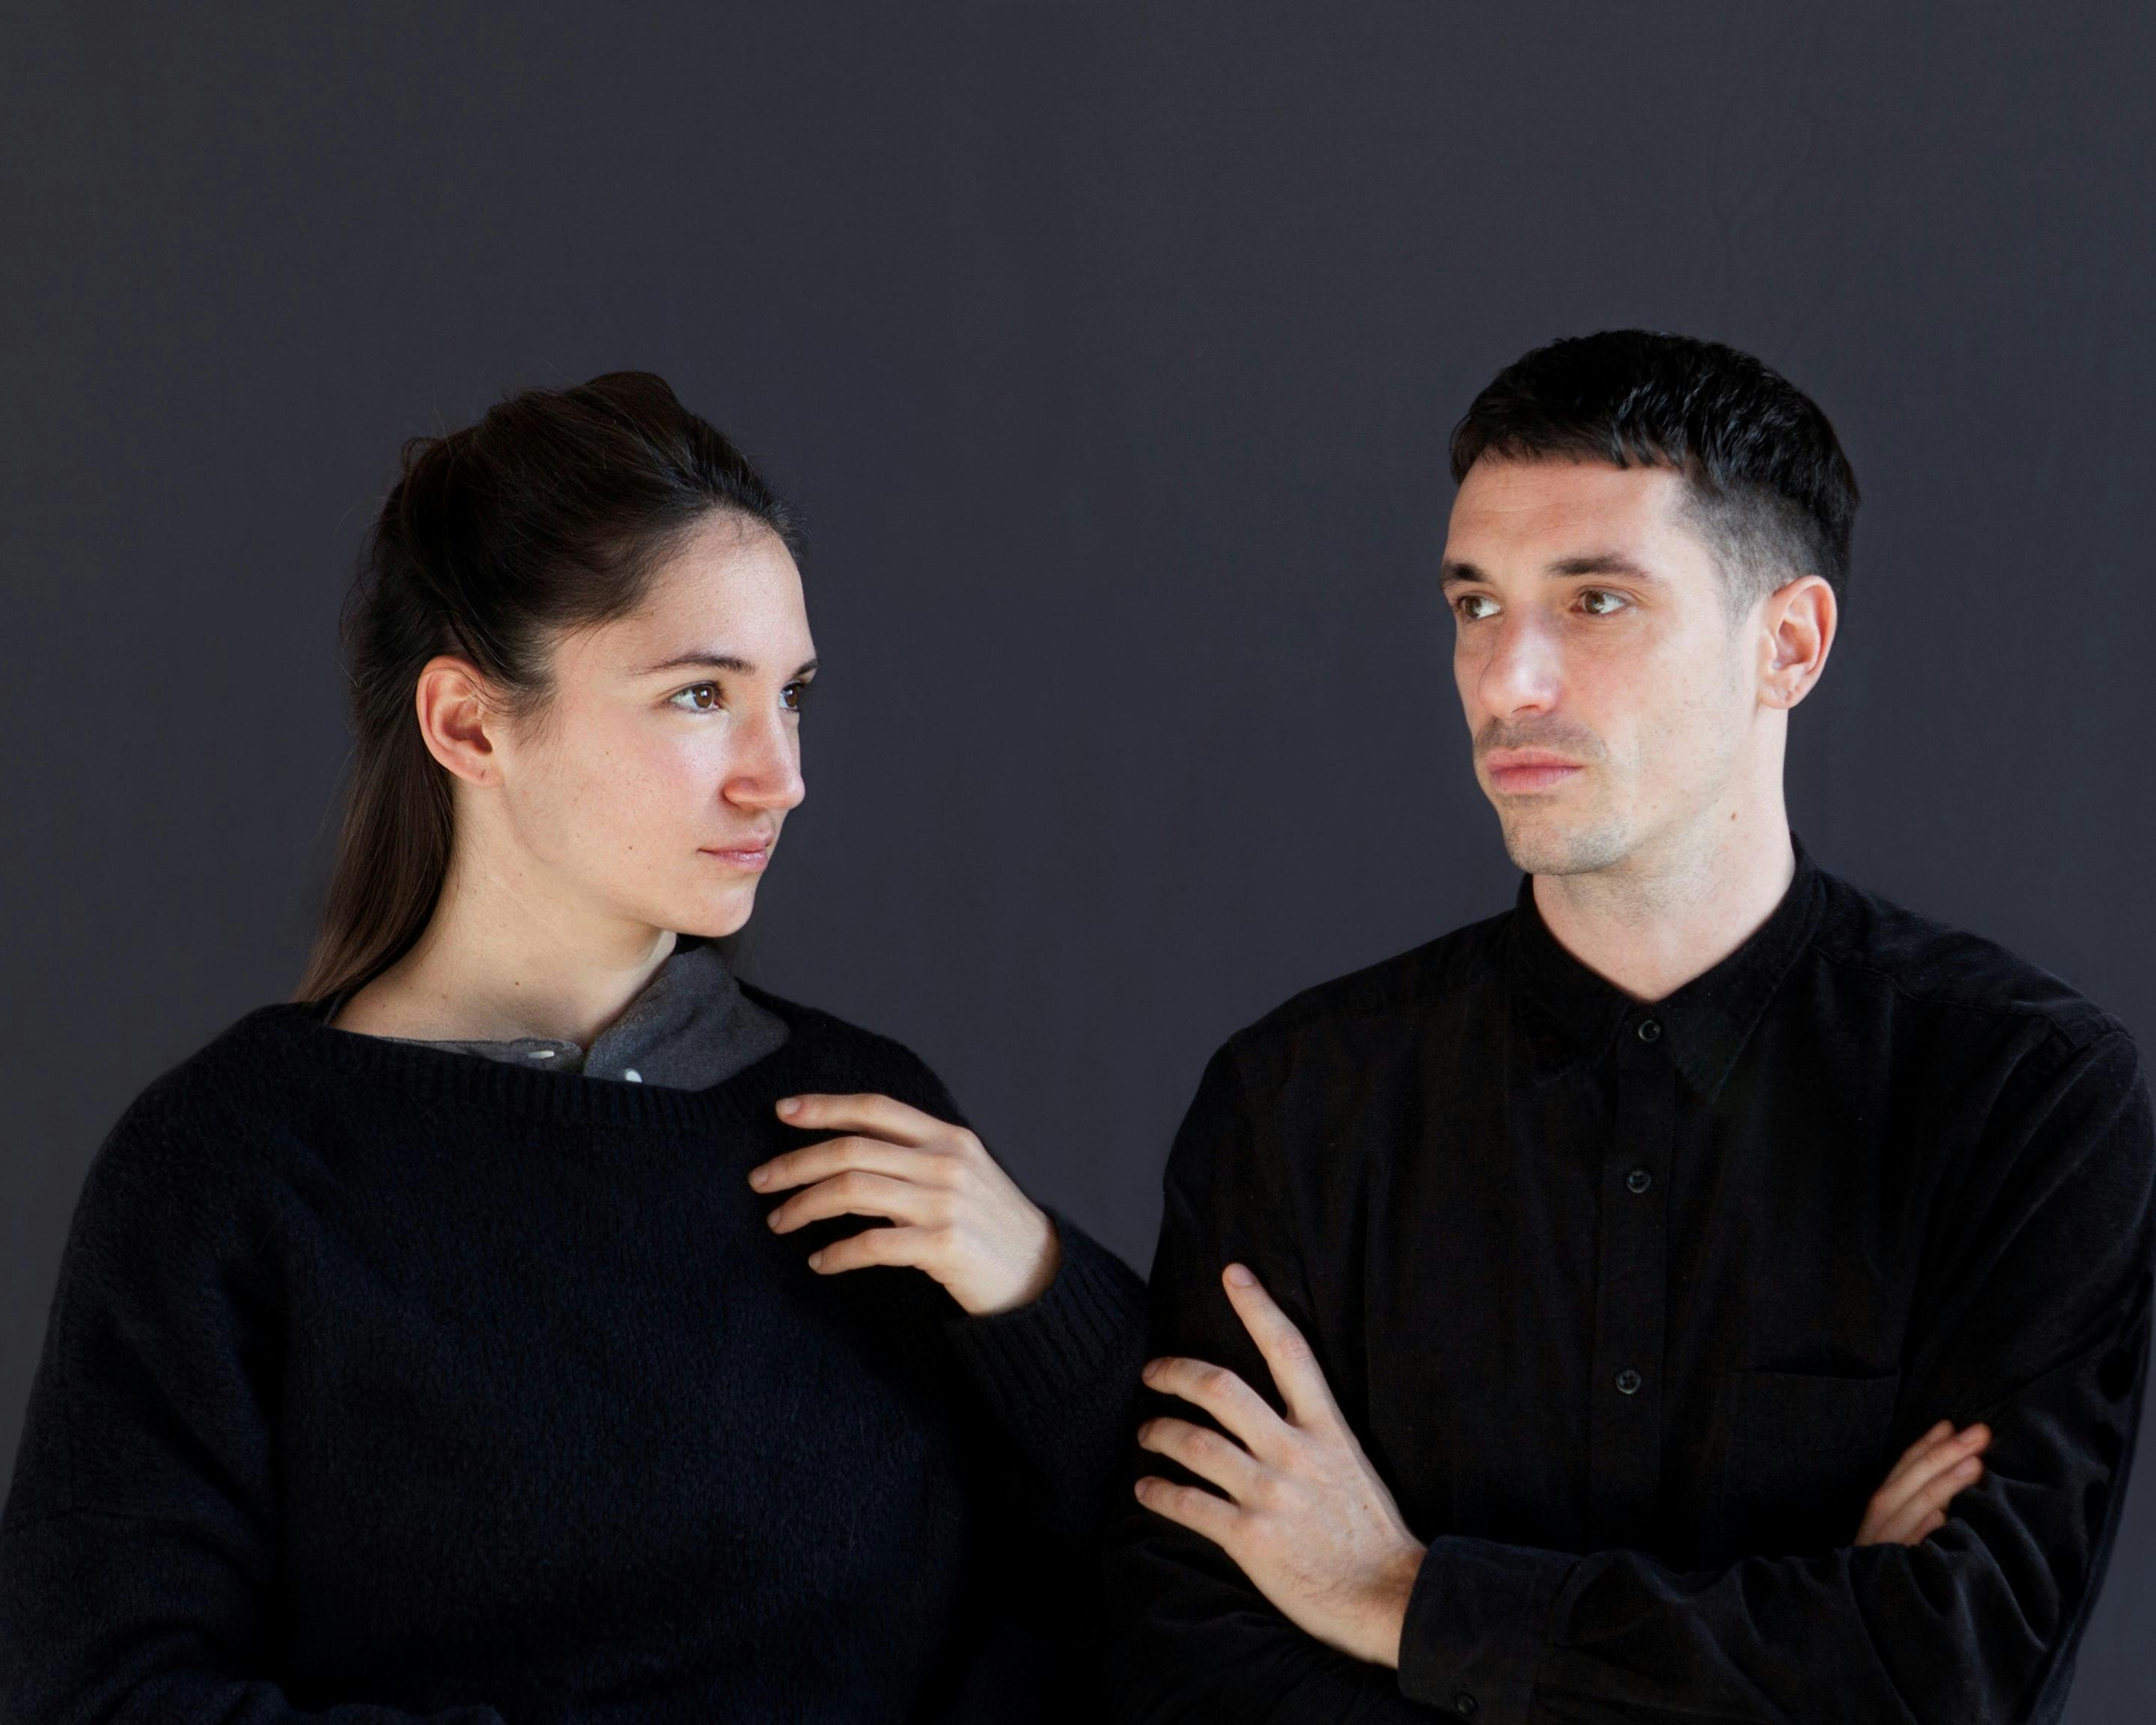 Ginevra Panzetti and Enrico Ticconi portrayed dressed in black 